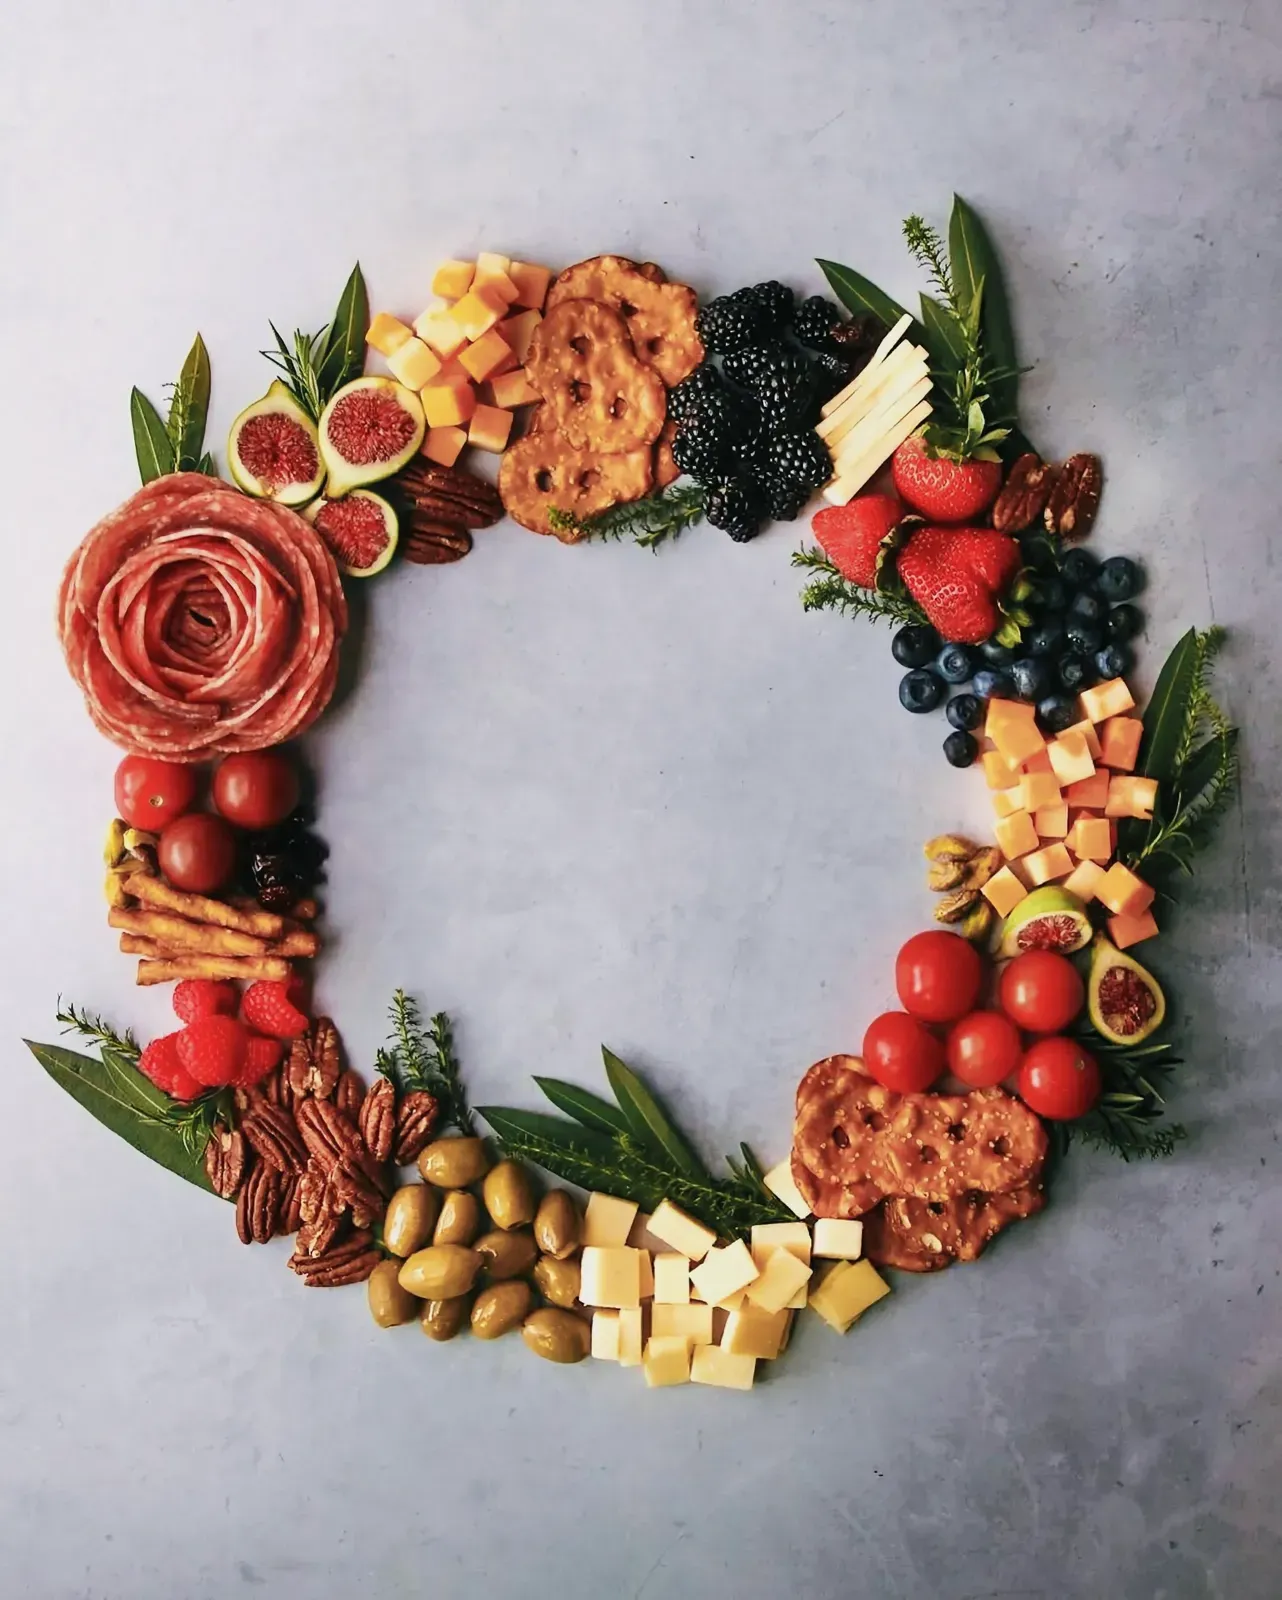 Beautifully arranged circular display of various foods inside a floral wreath